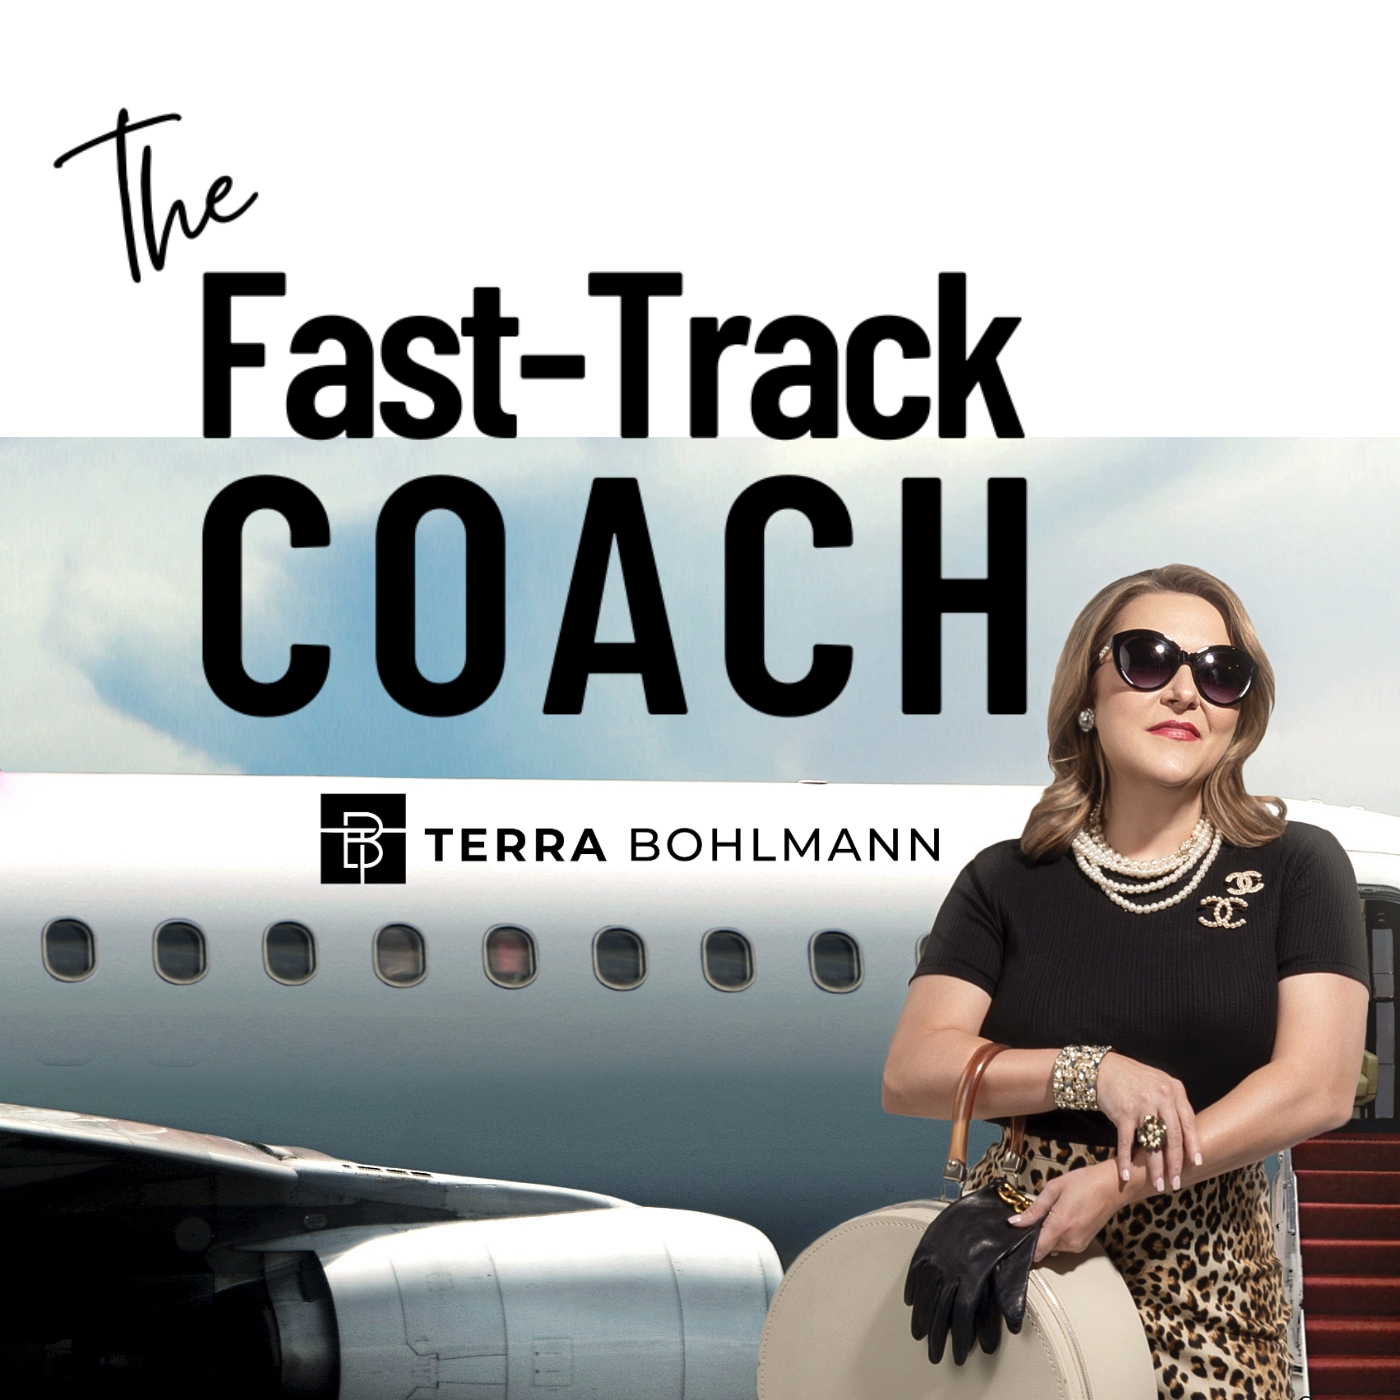 Terra Bohlmann – Your Business Coach for Coaches